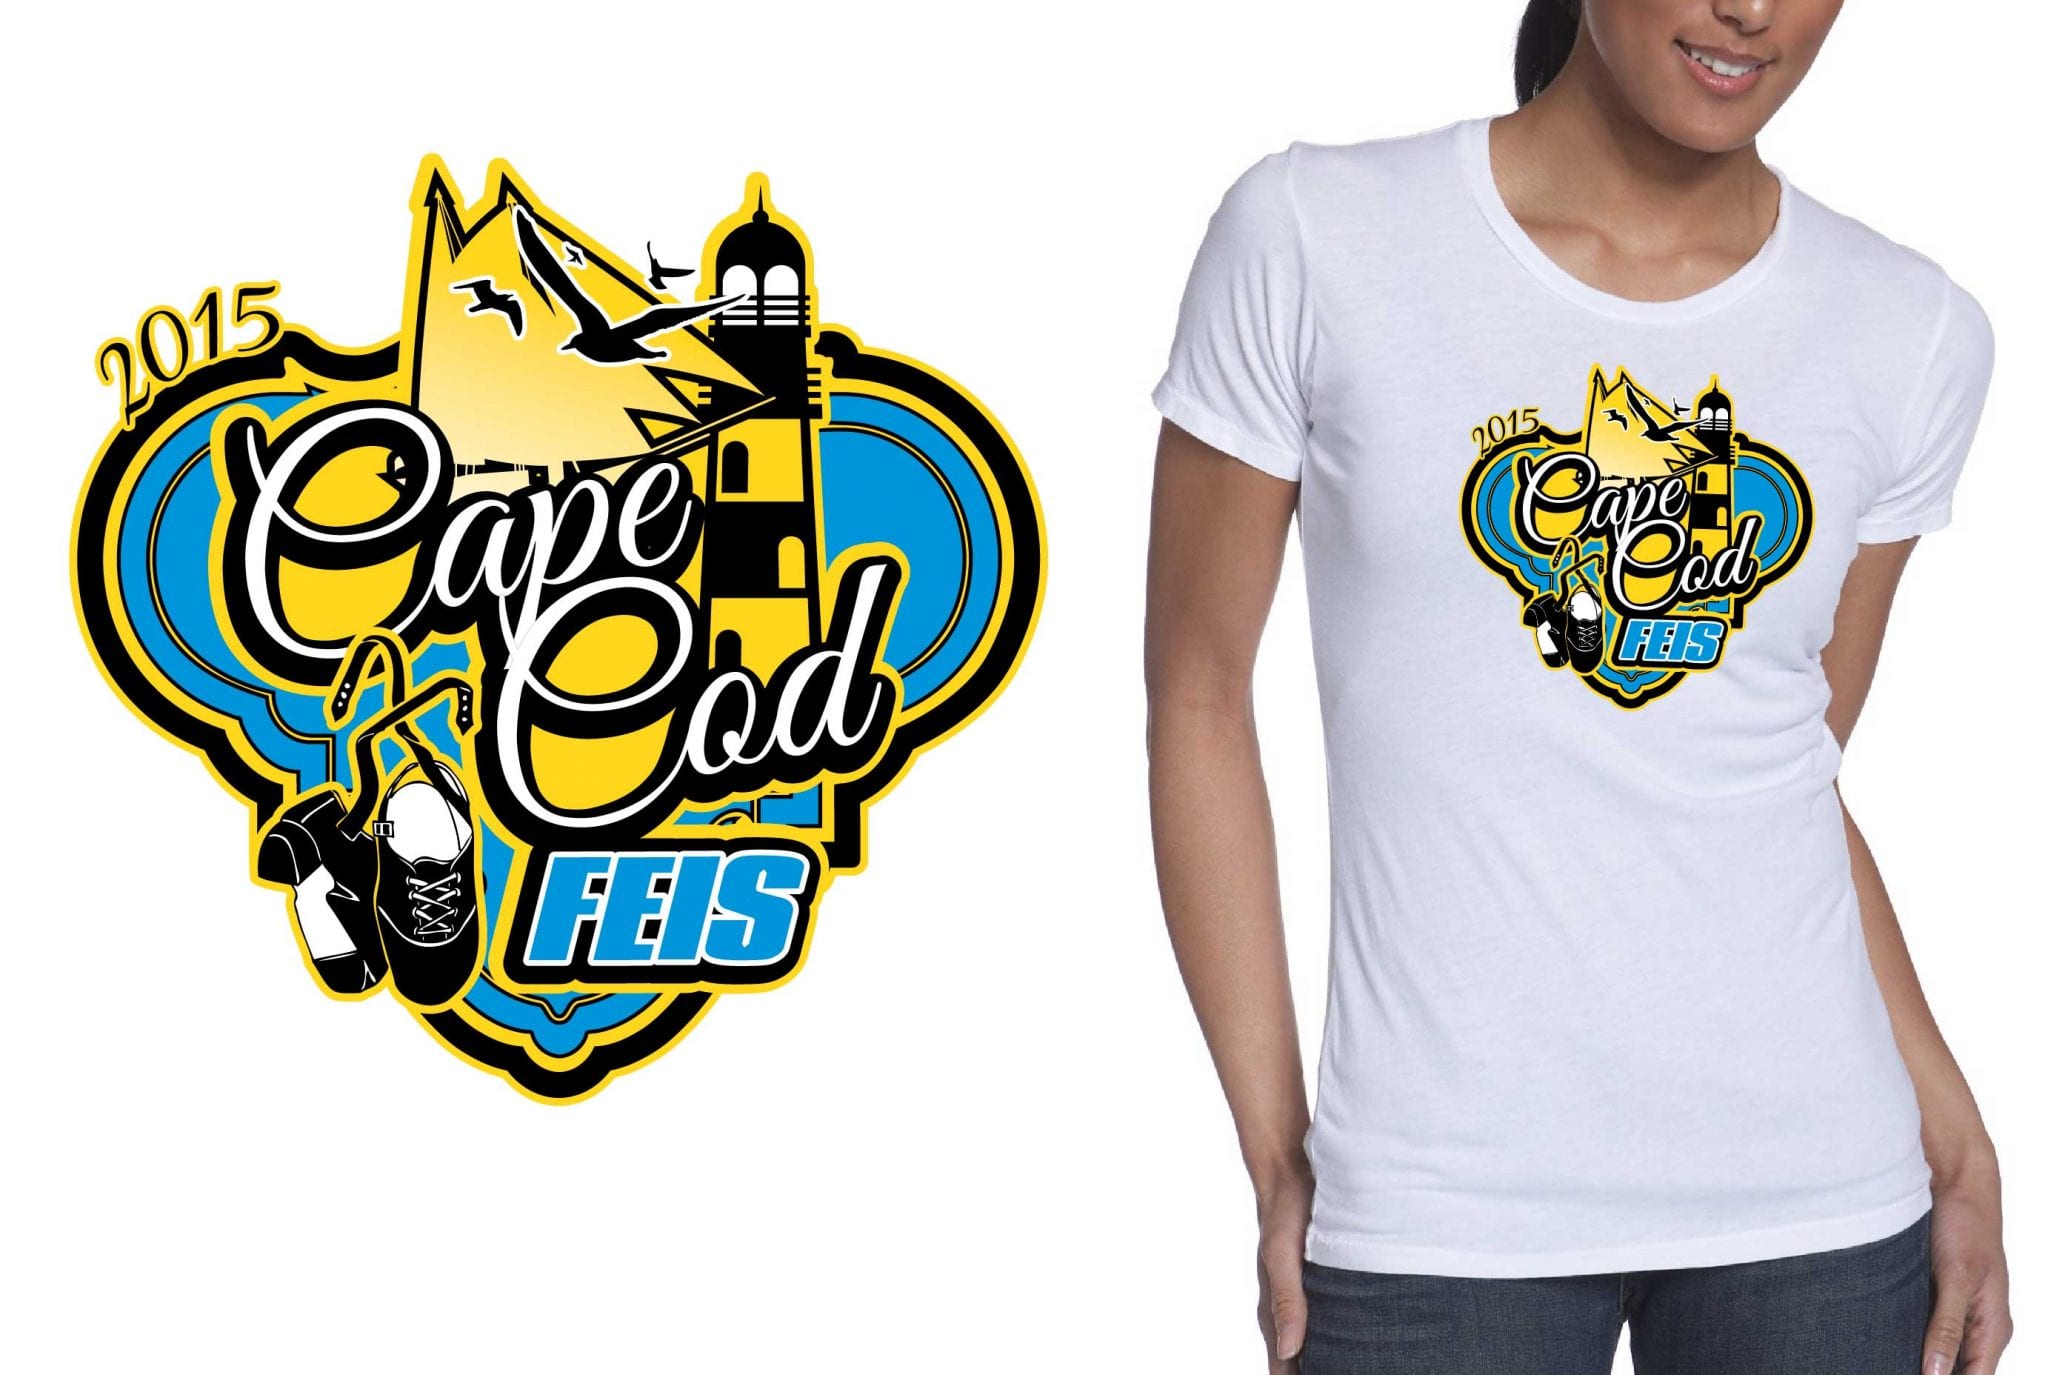 Nice vector tshirt logo design for 2015 Cape Cod Feis event